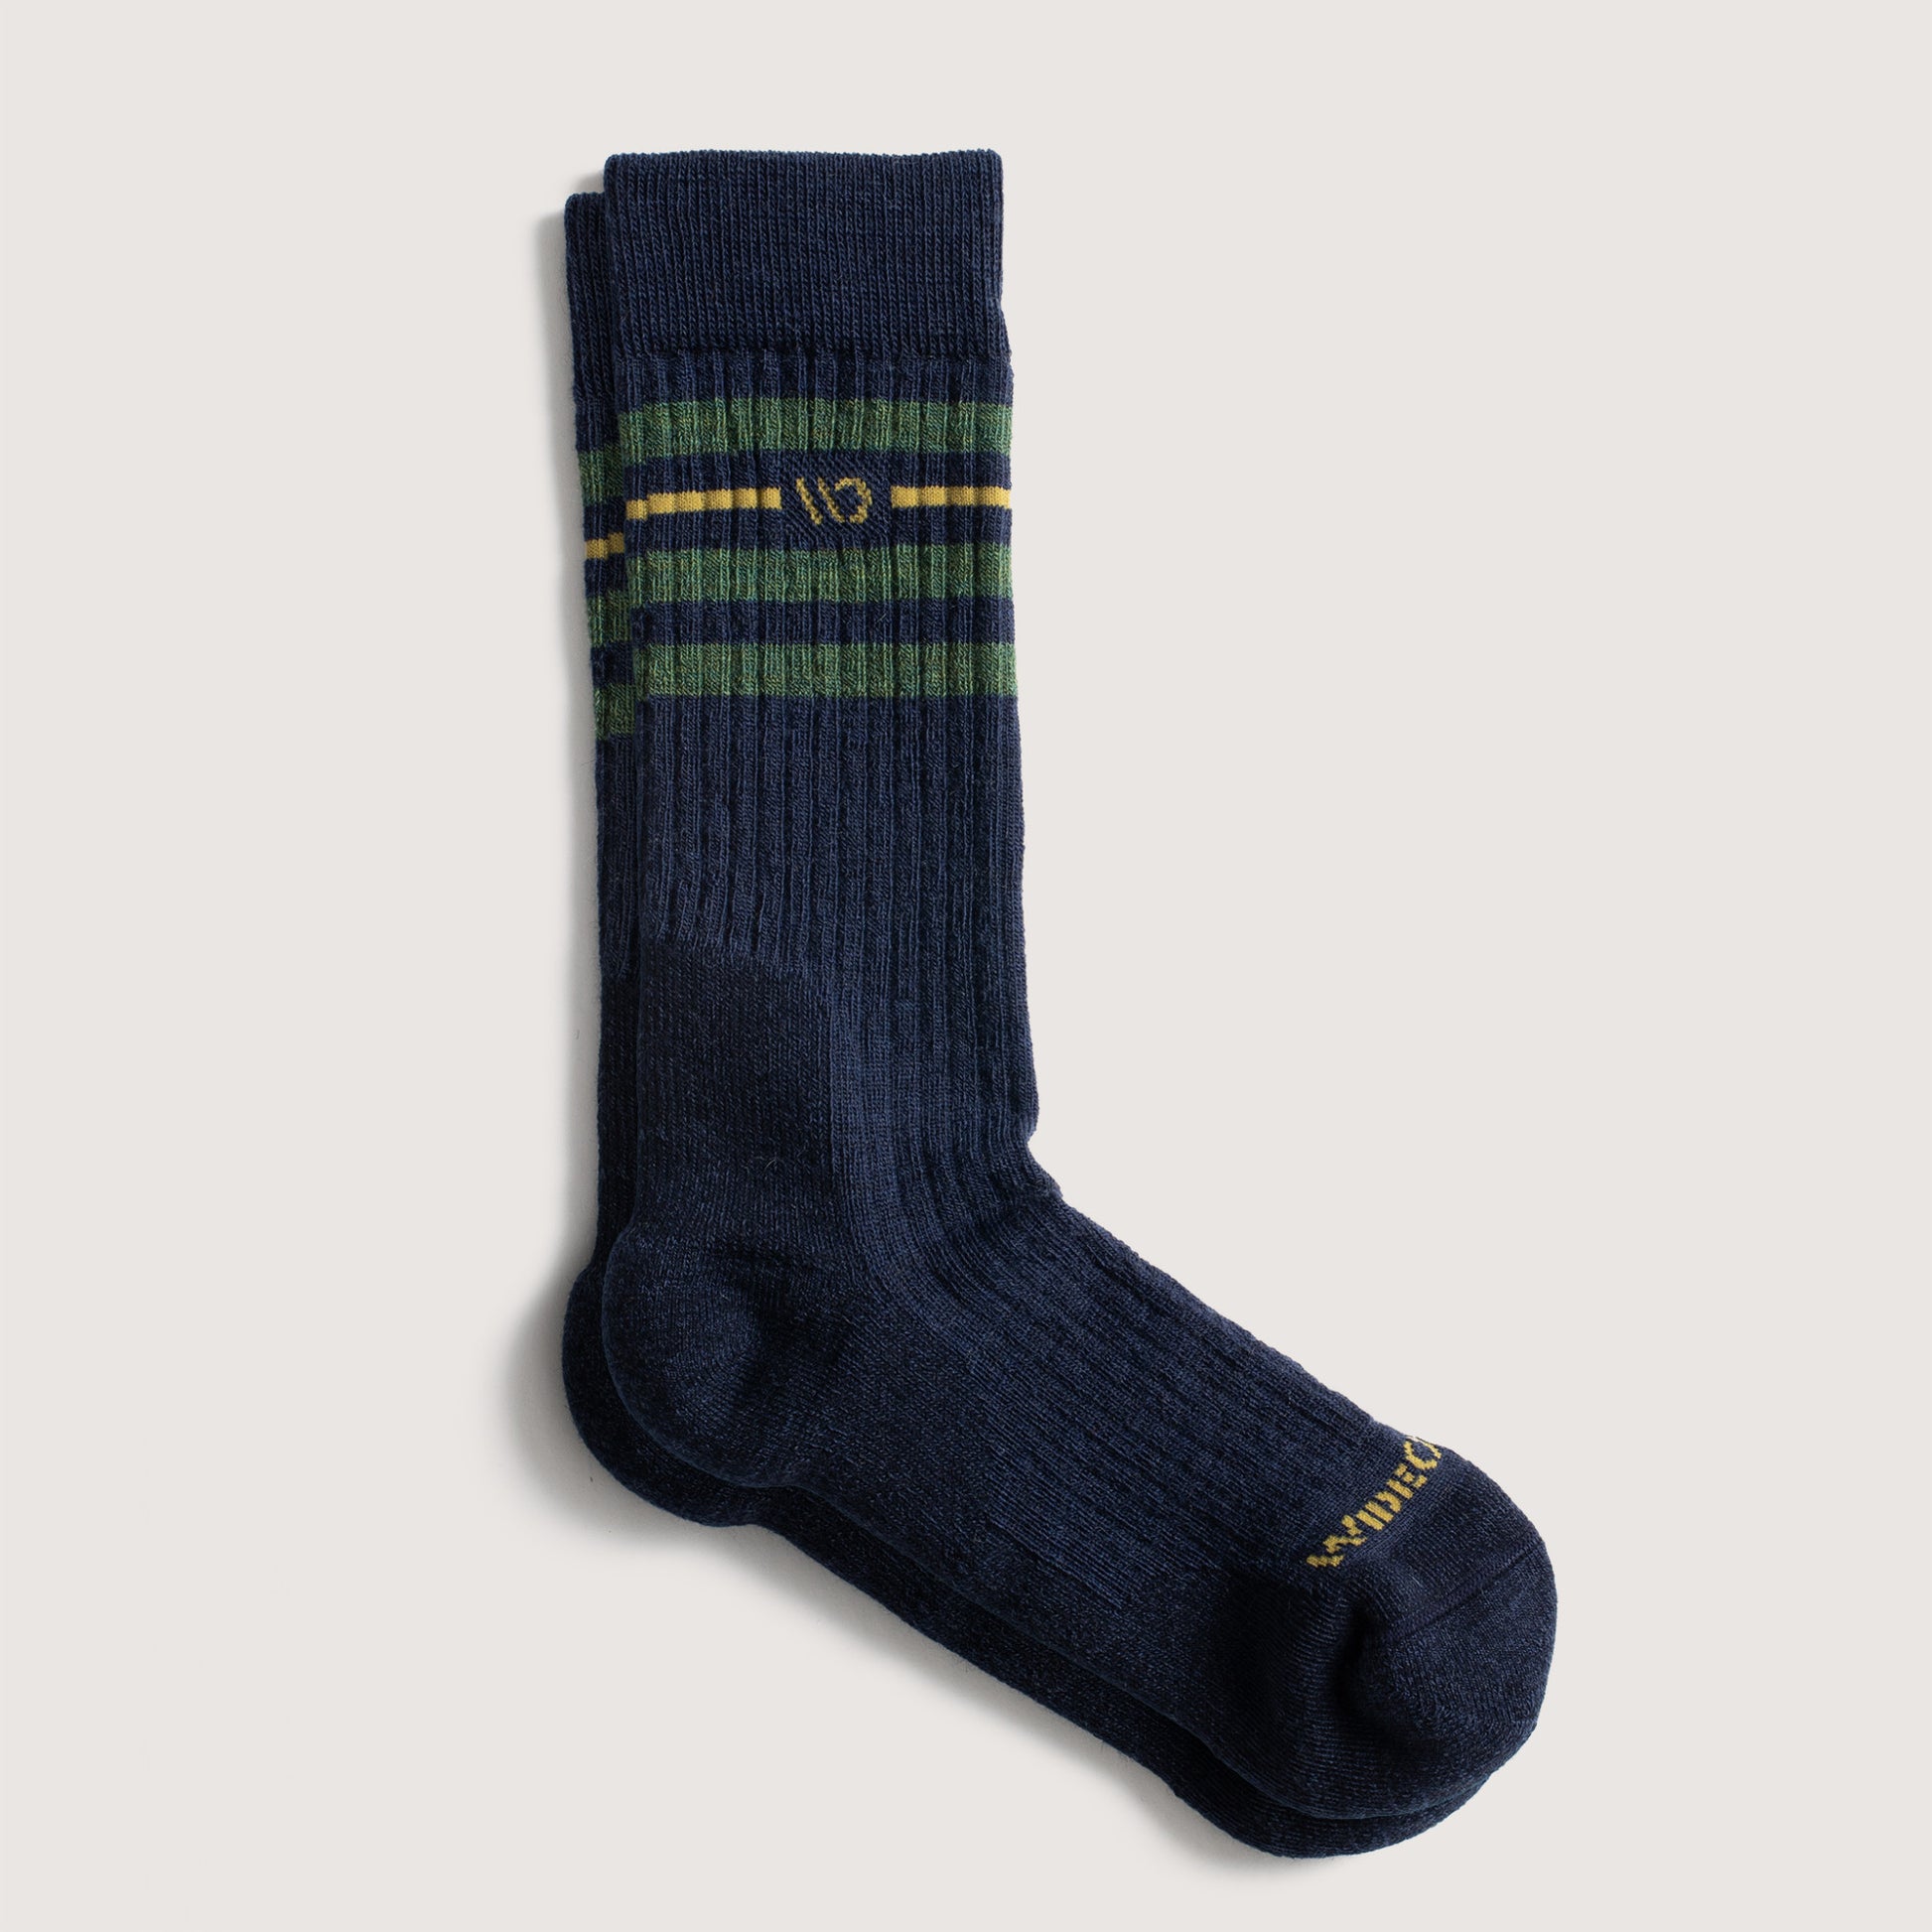 Flat socks featuring yellow logo, denim body, and green stripes below the cuff --Denim